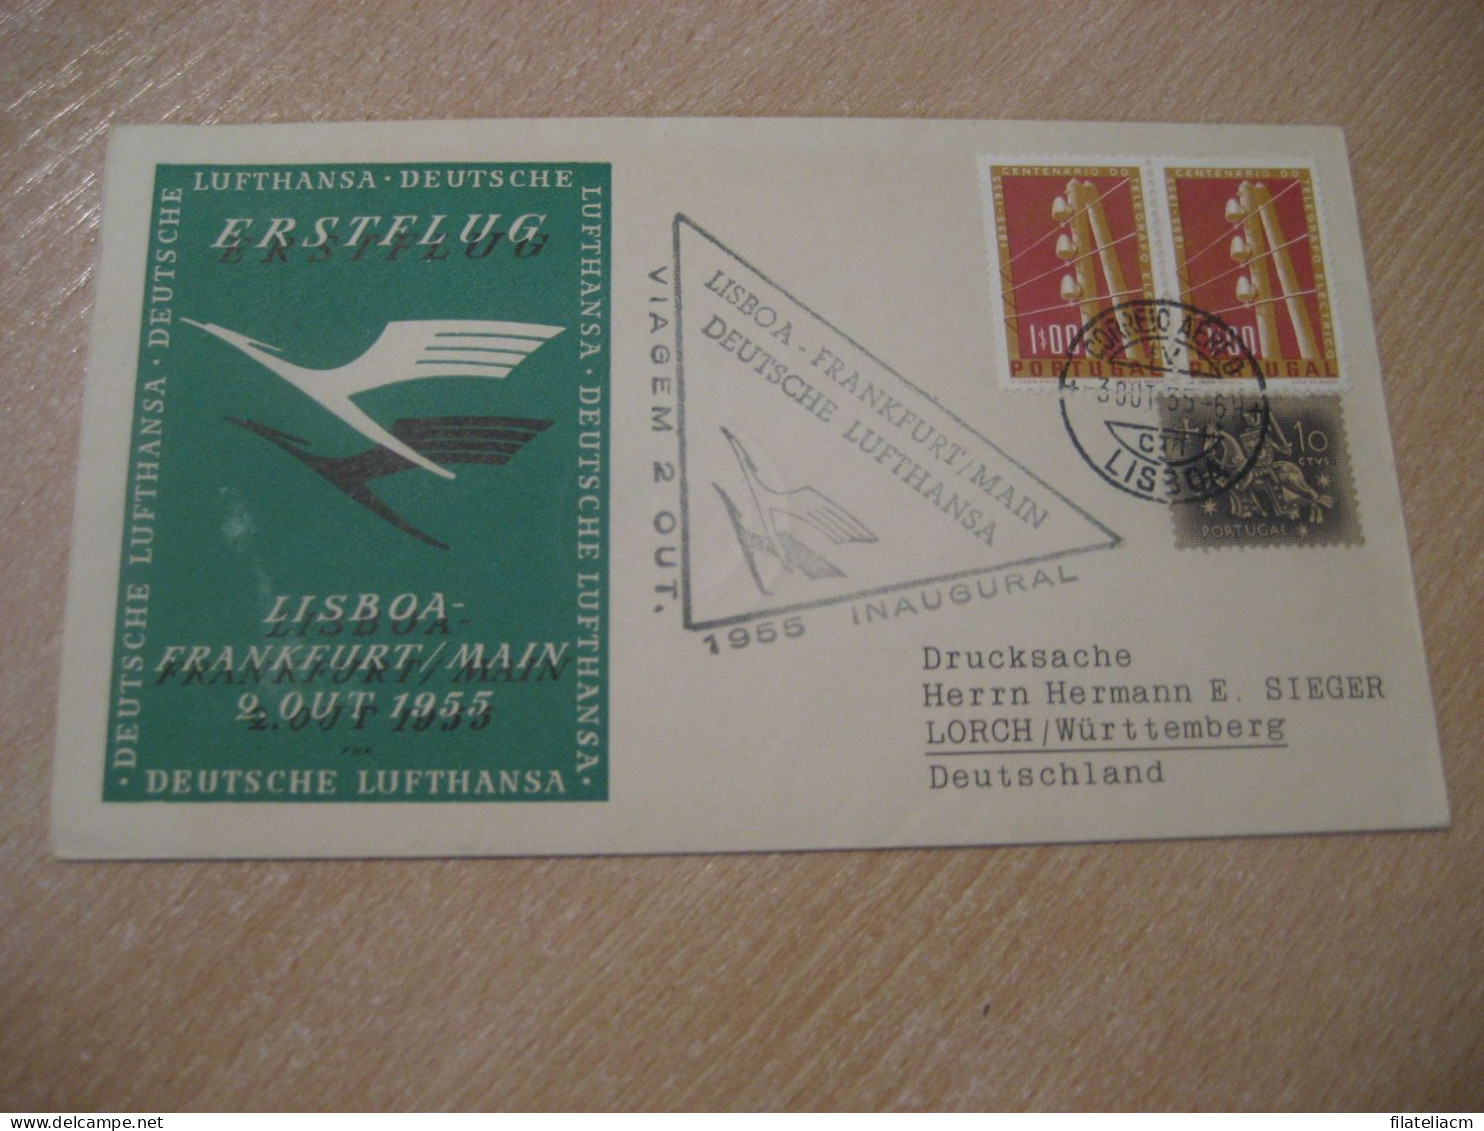 LISBOA - FRANKFURT 1955 To Lorch First Flight Inaugural Lufthansa Cancel Cover PORTUGAL GERMANY - Cartas & Documentos